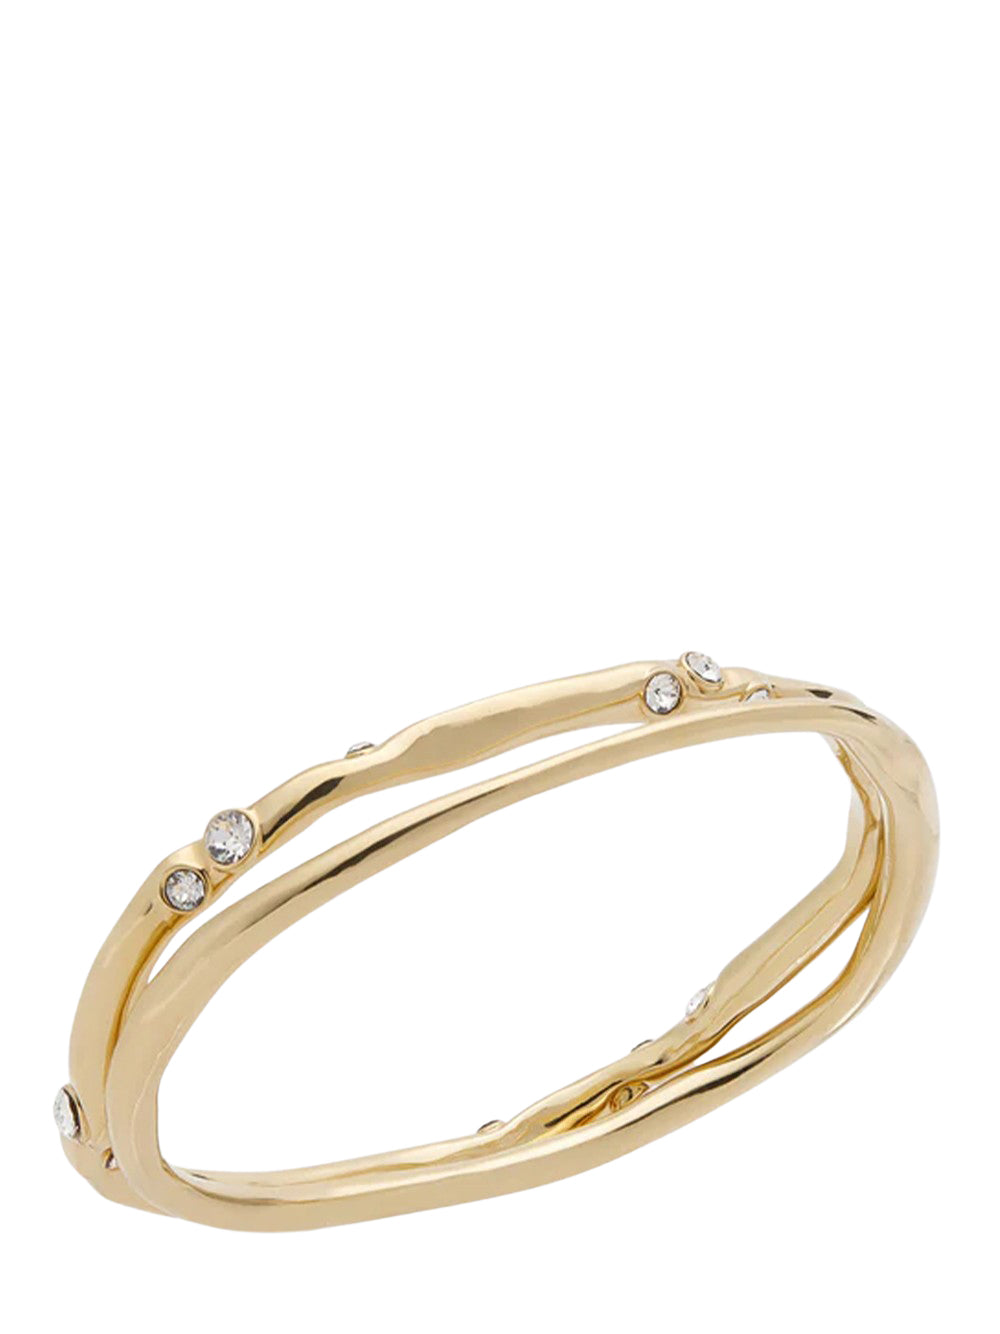 Crystal Cuff Bracelet Set (Gold)